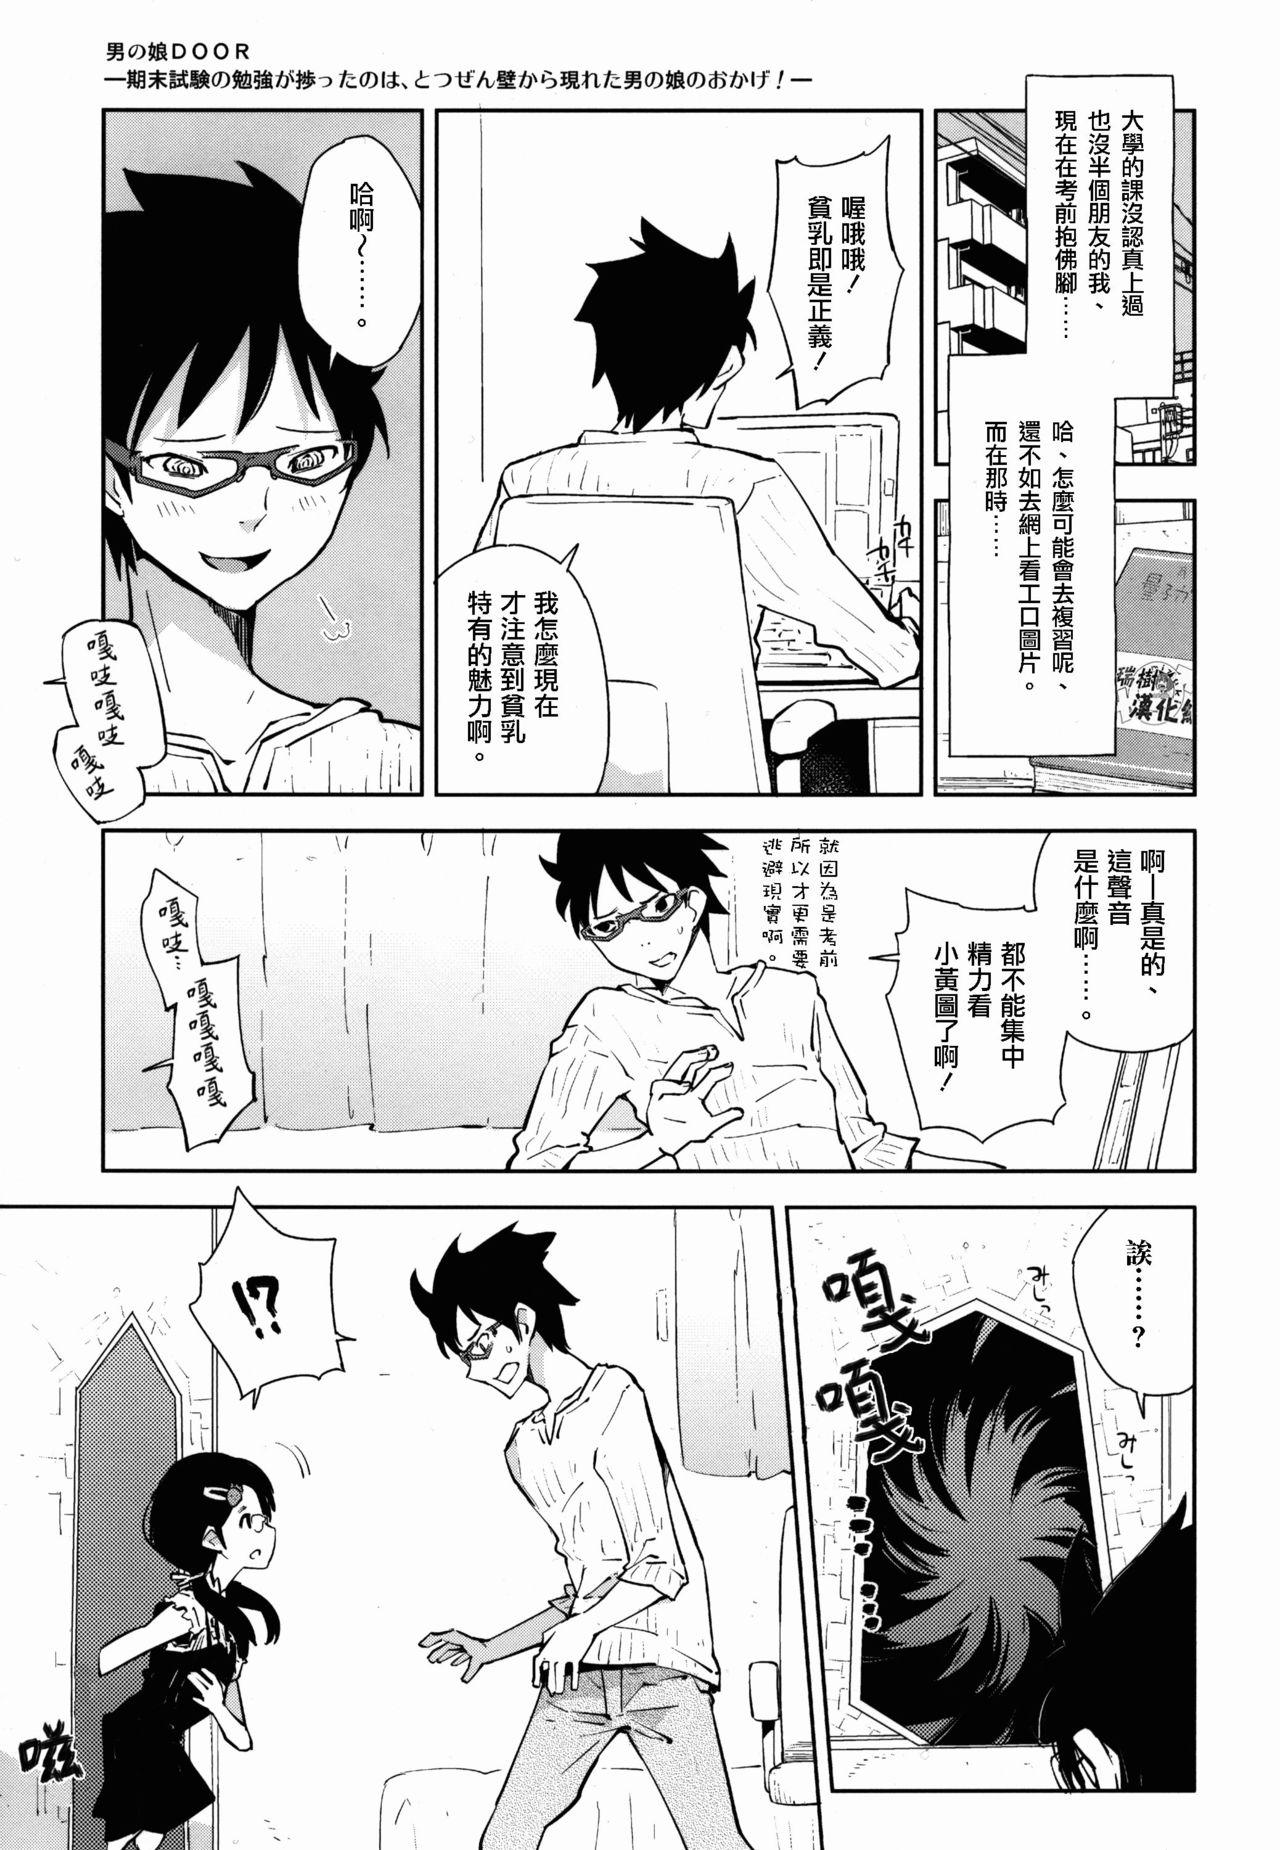 Masturbandose Otokonoko DOOR Duro - Page 5